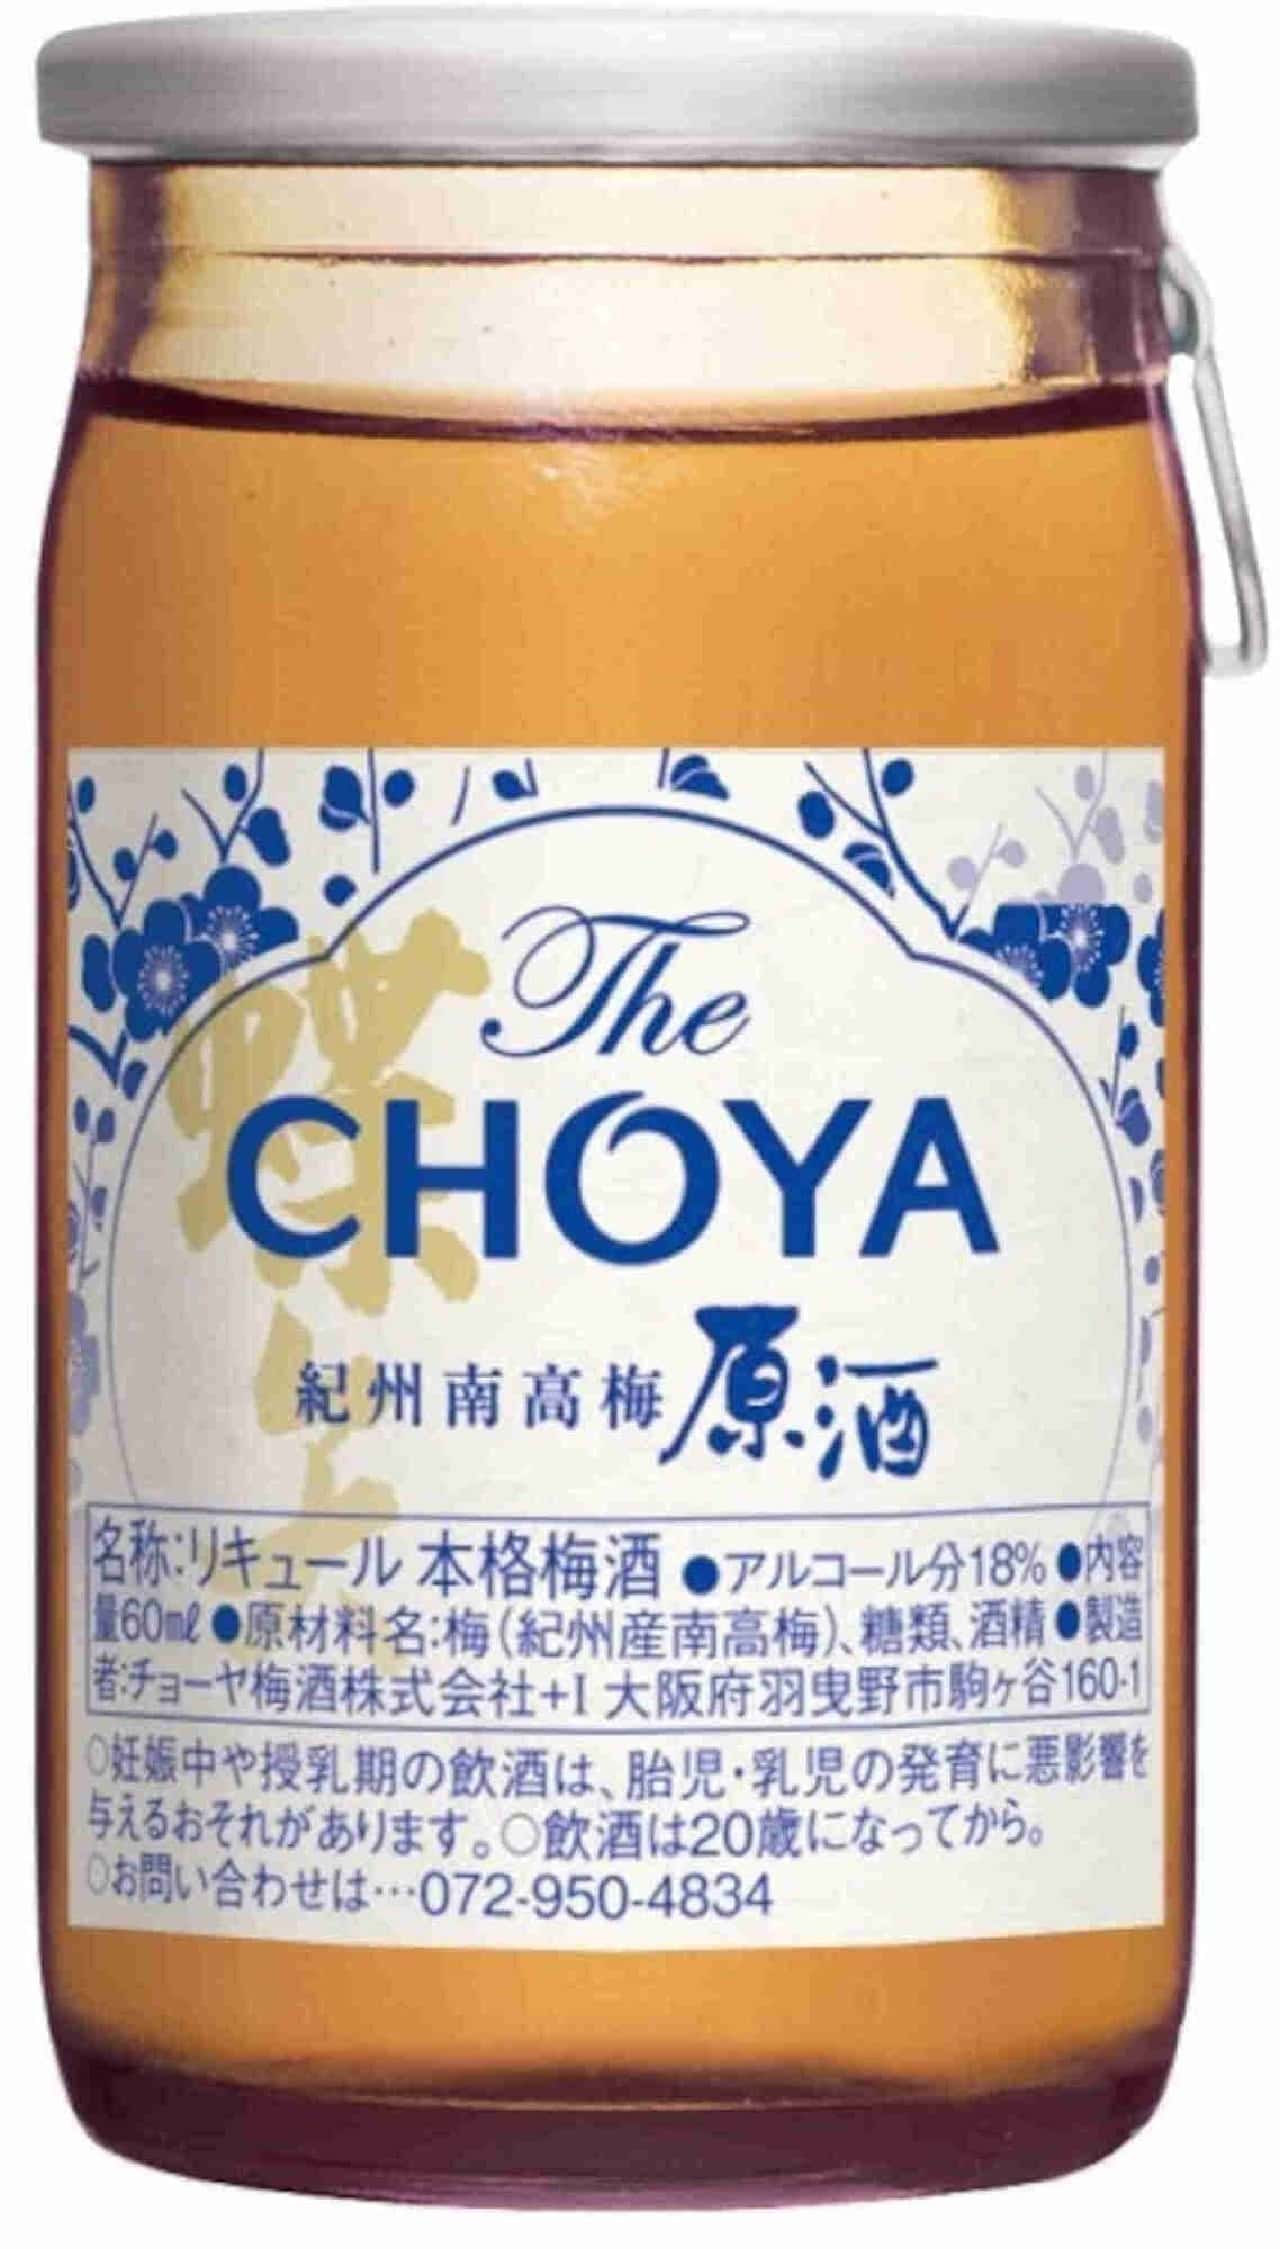 The CHOYA #Handy plum wine set